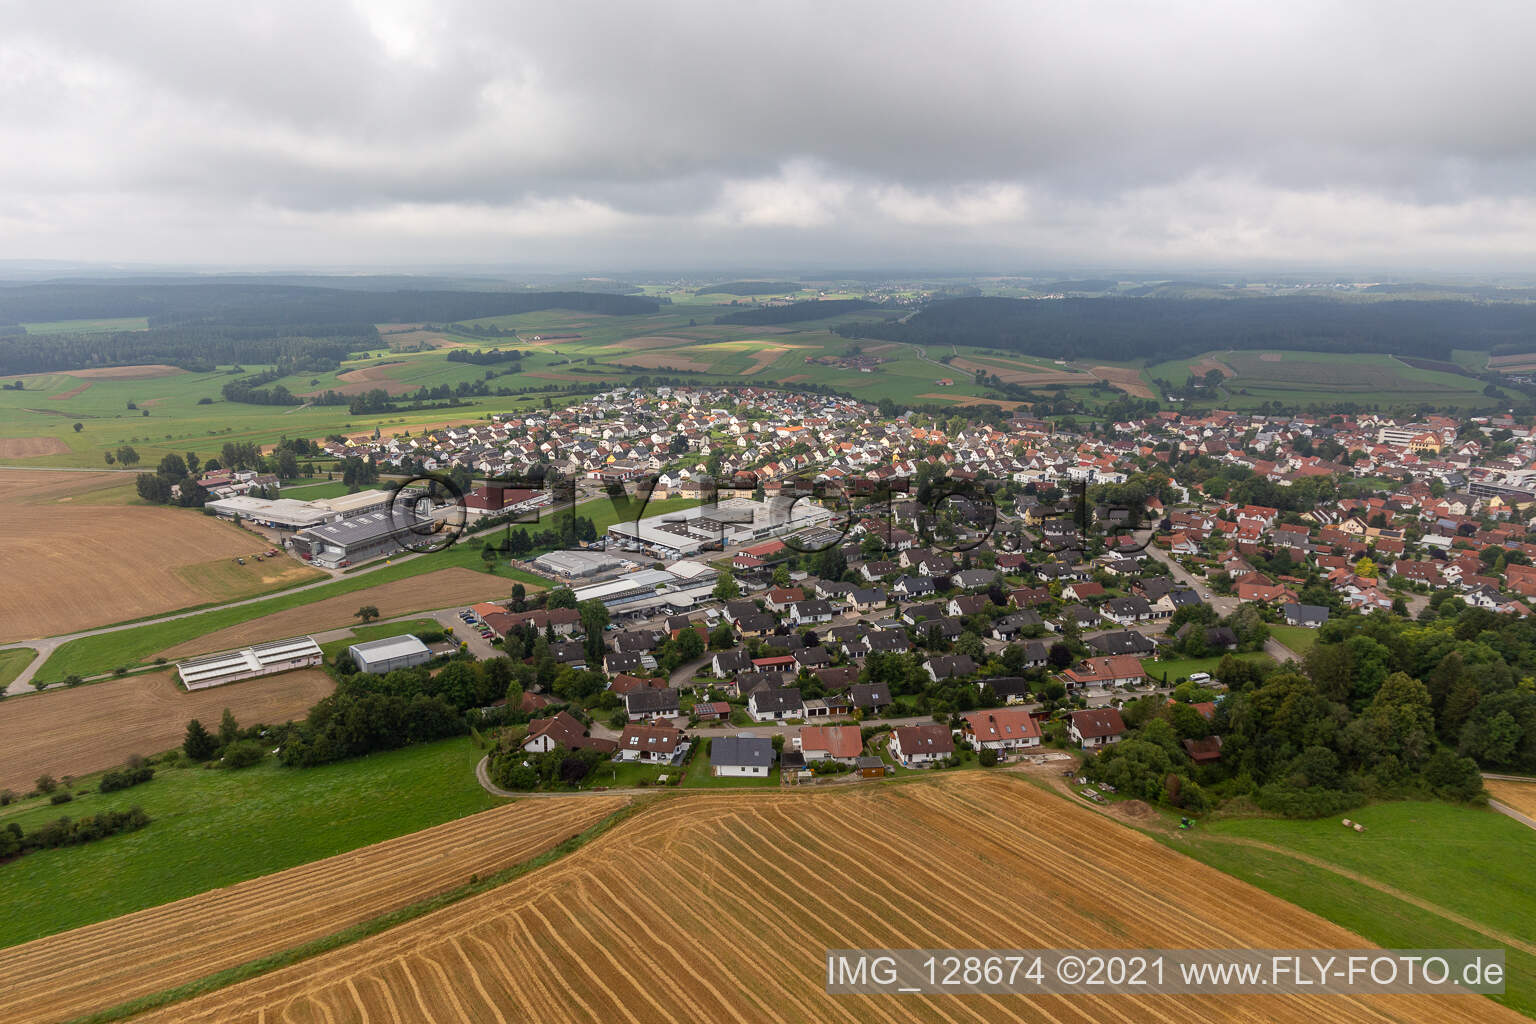 Dunningen dans le département Bade-Wurtemberg, Allemagne vue d'en haut